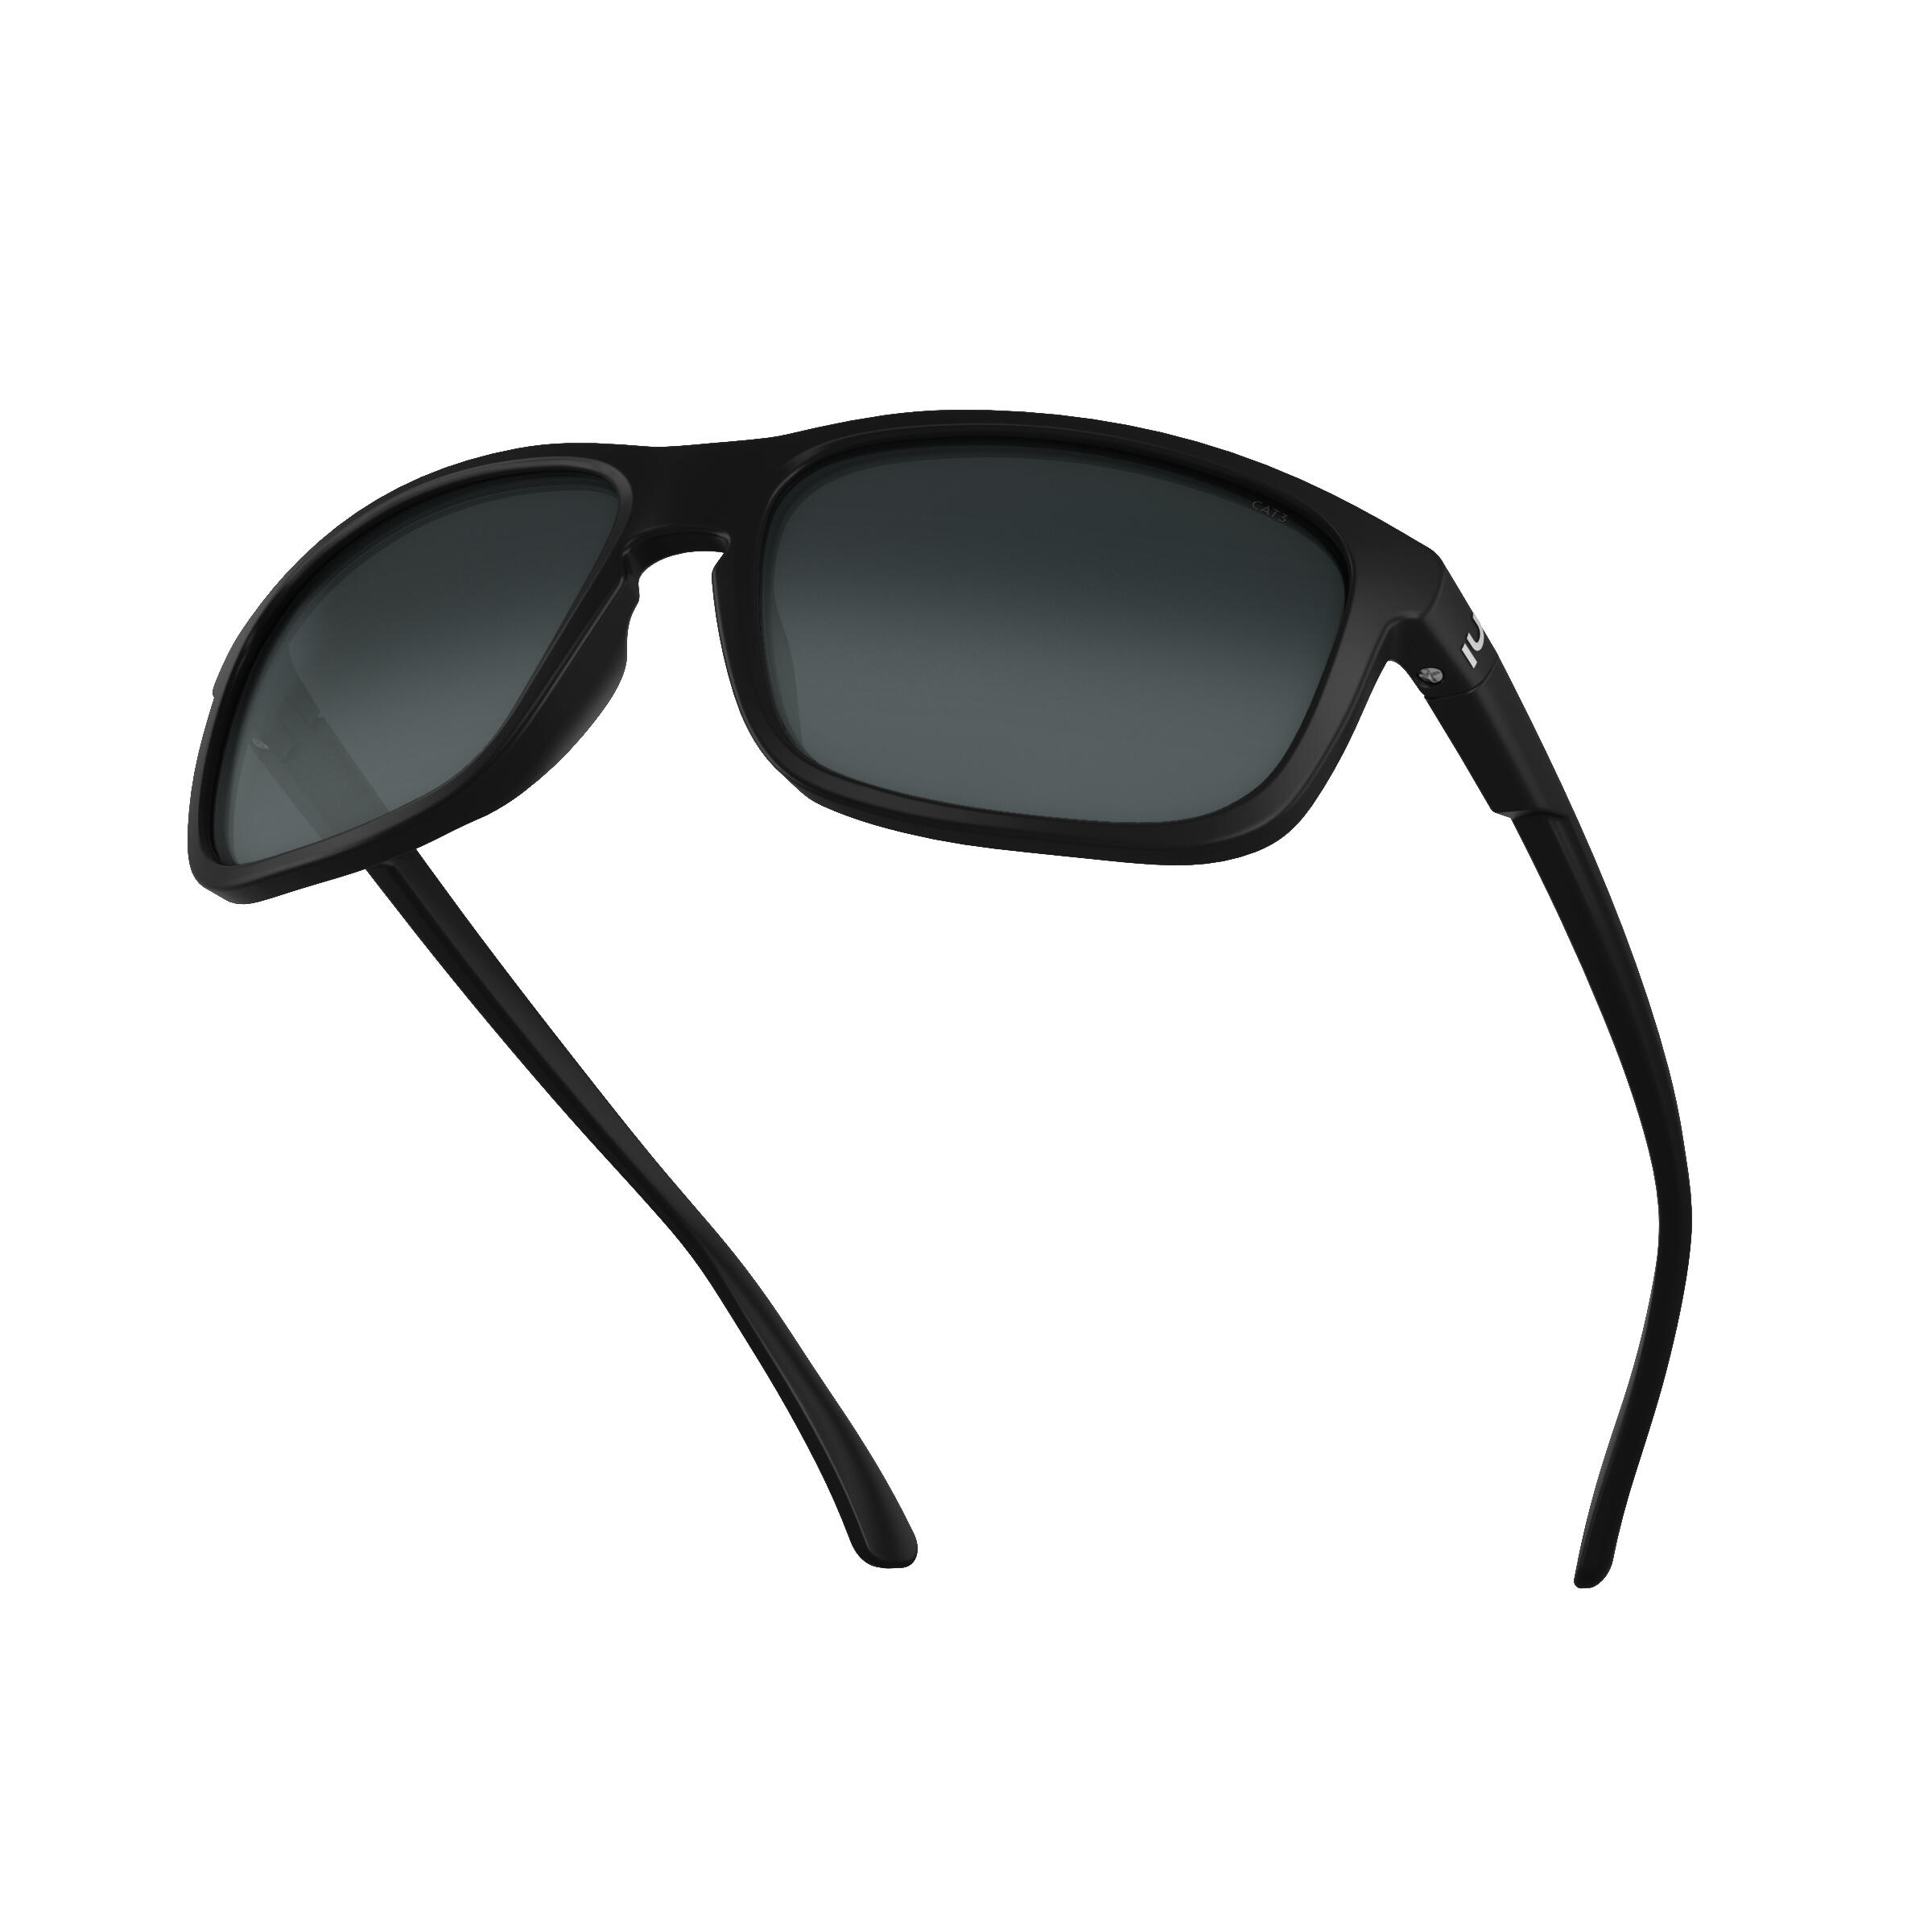 Hiking Category 3 Sunglasses - MH 100